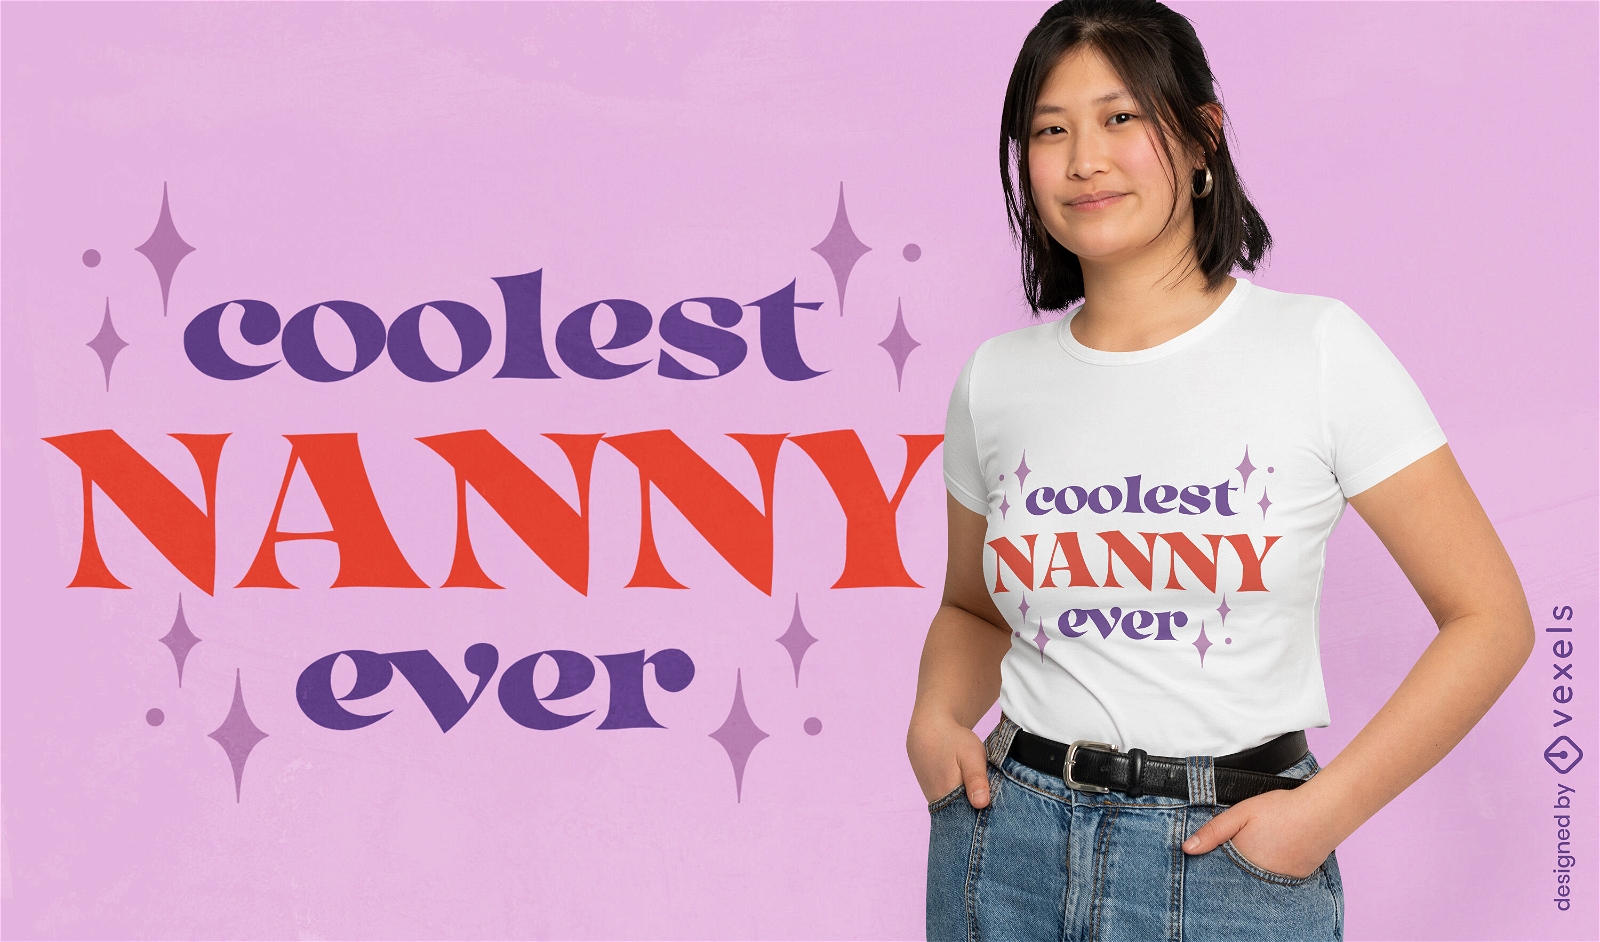 Coolest nanny tribute t-shirt design